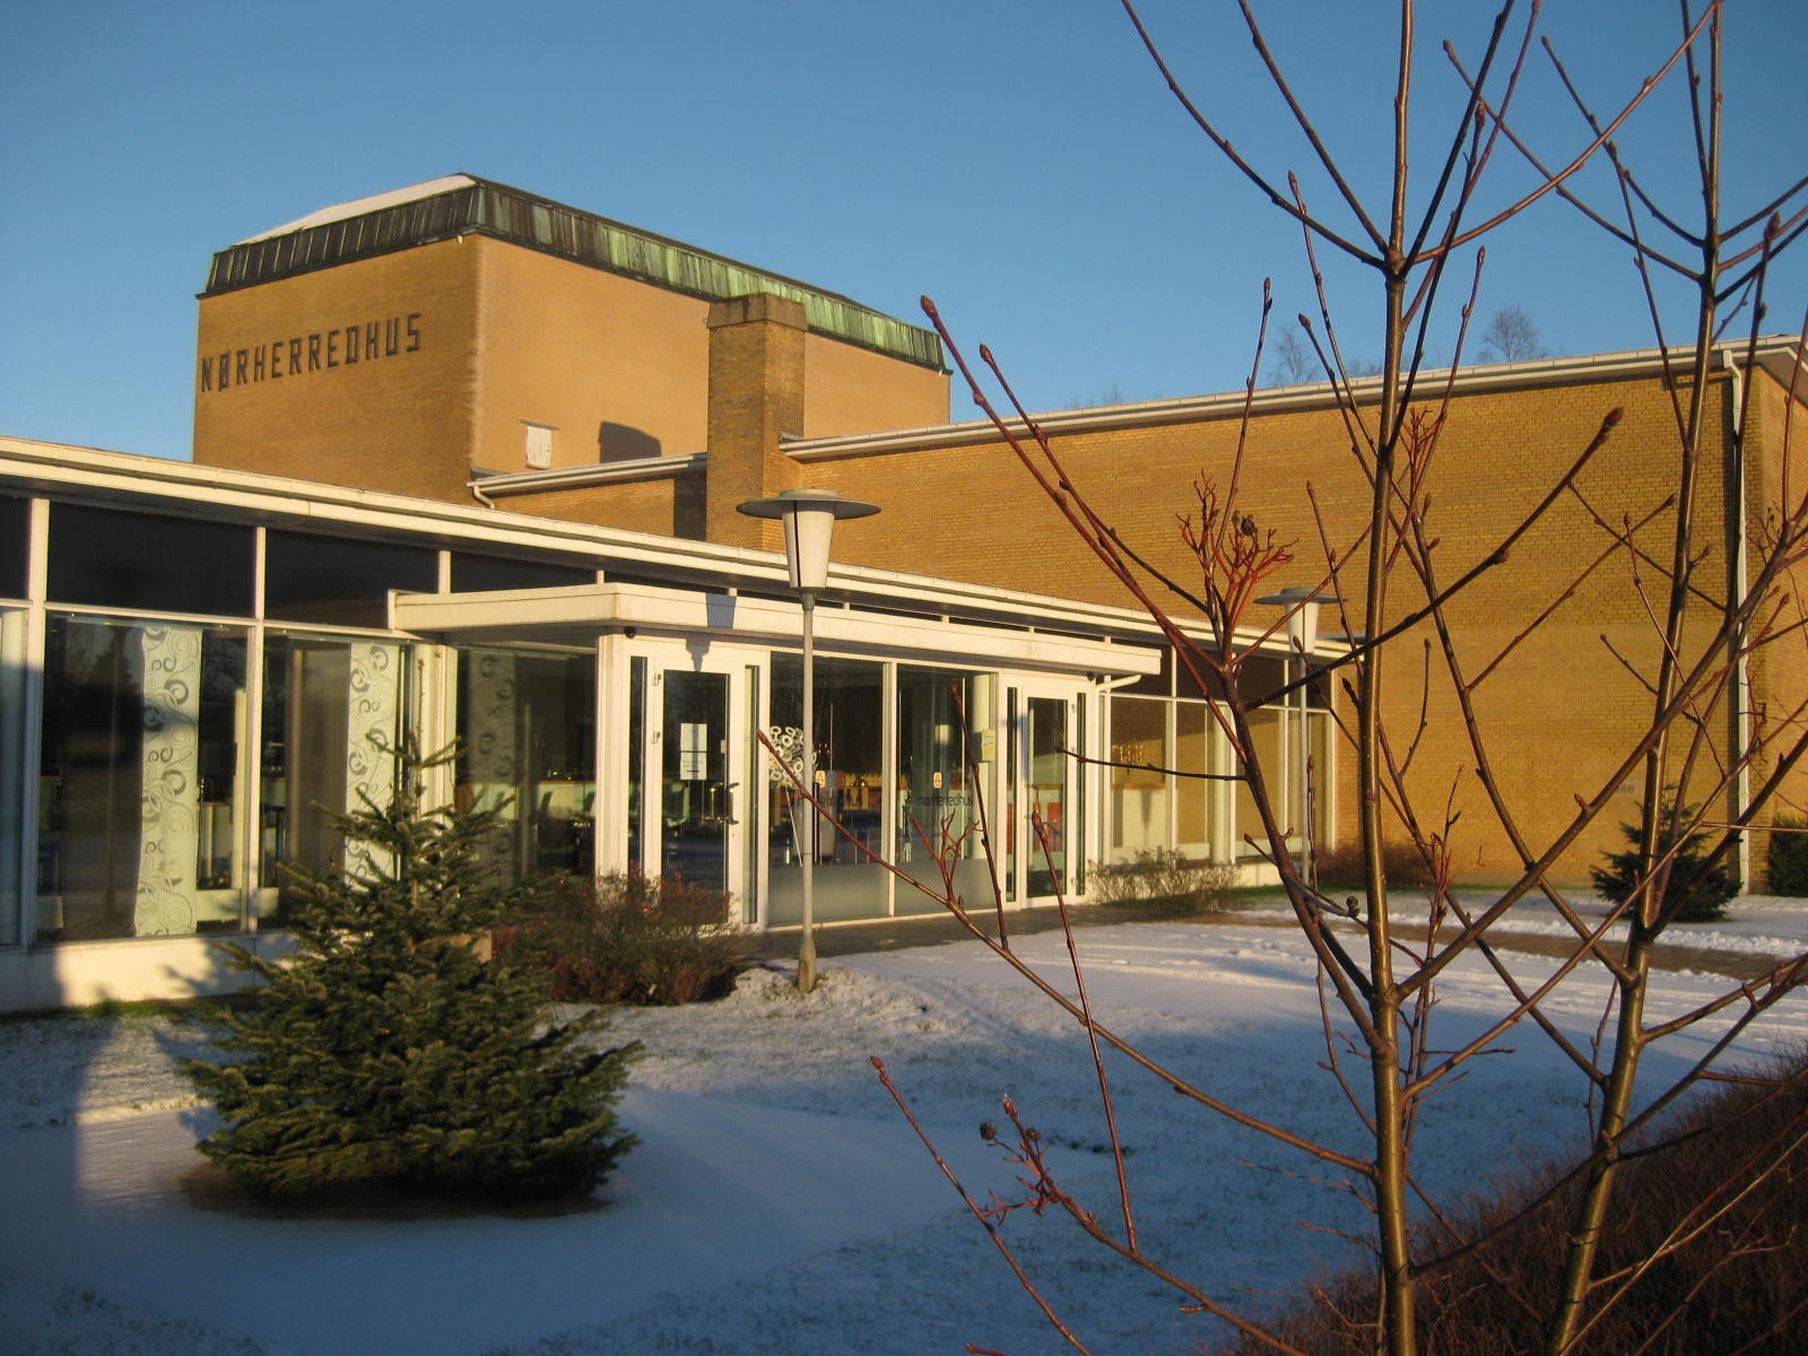 Hotel Norherredhus in Nordborg, DK